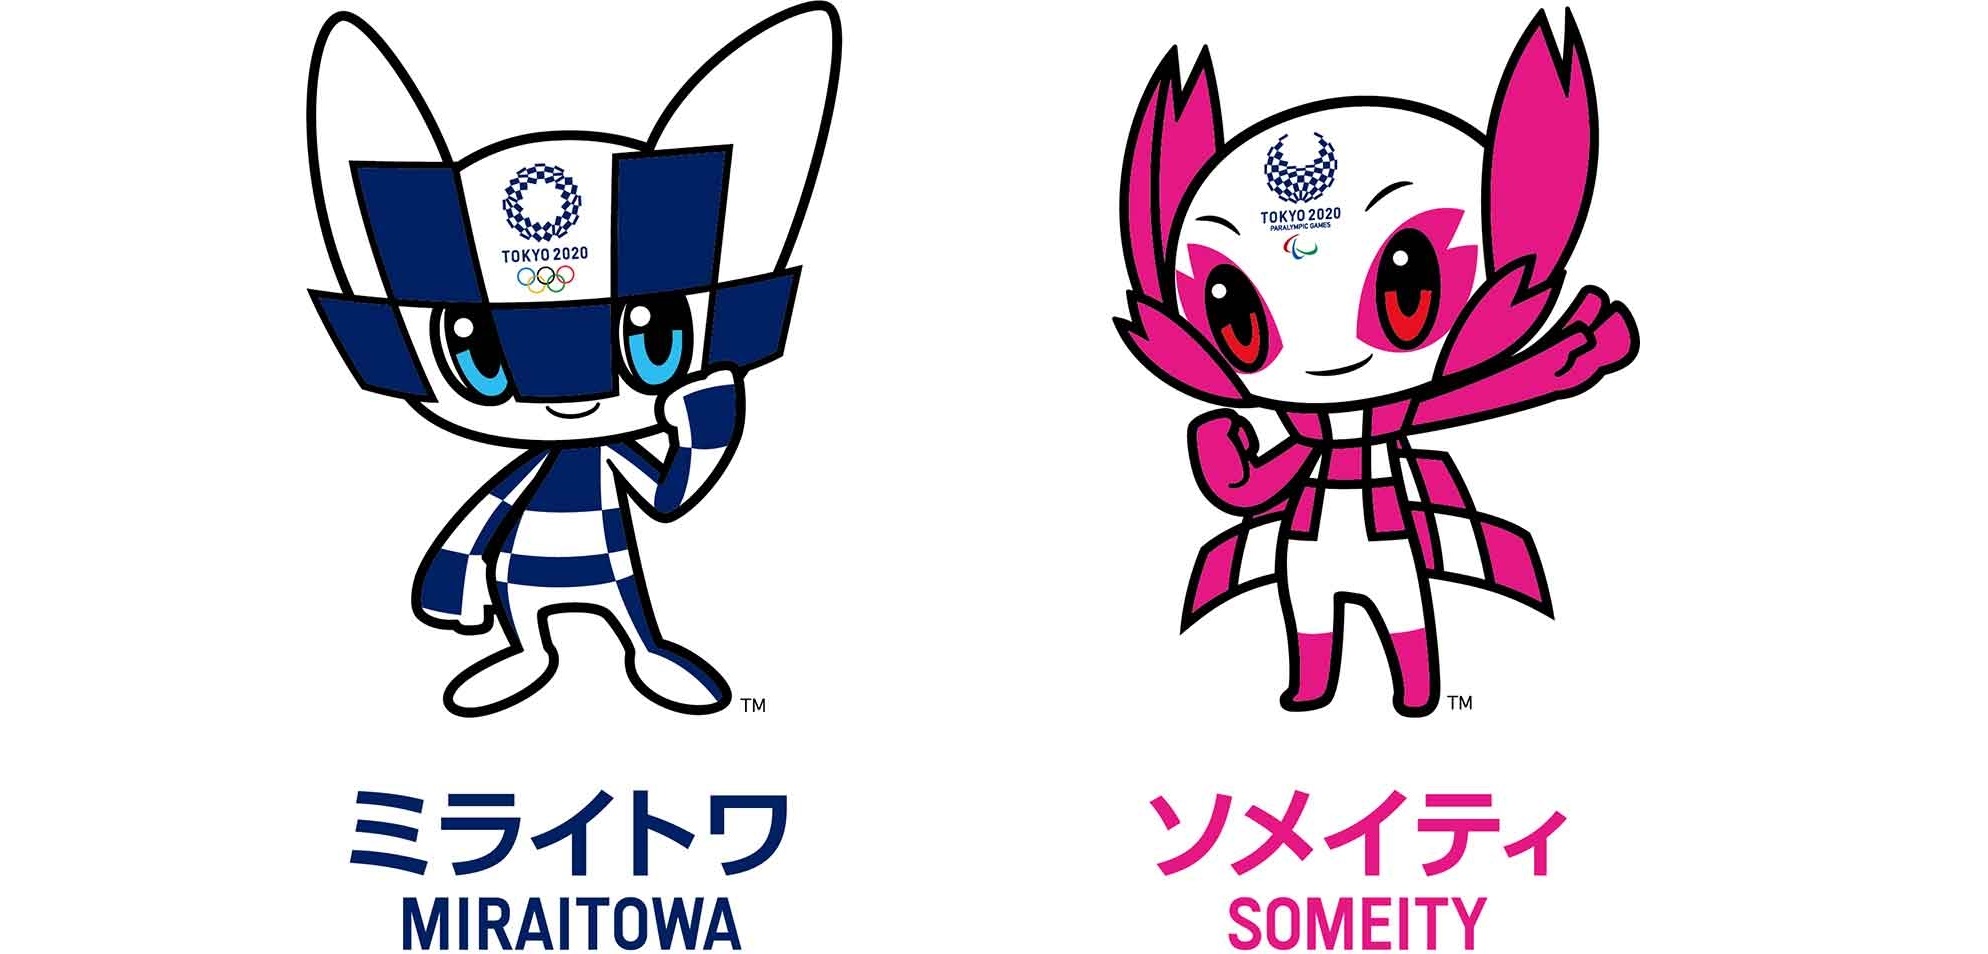 В Японии представили талисманы Олимпиады-2020